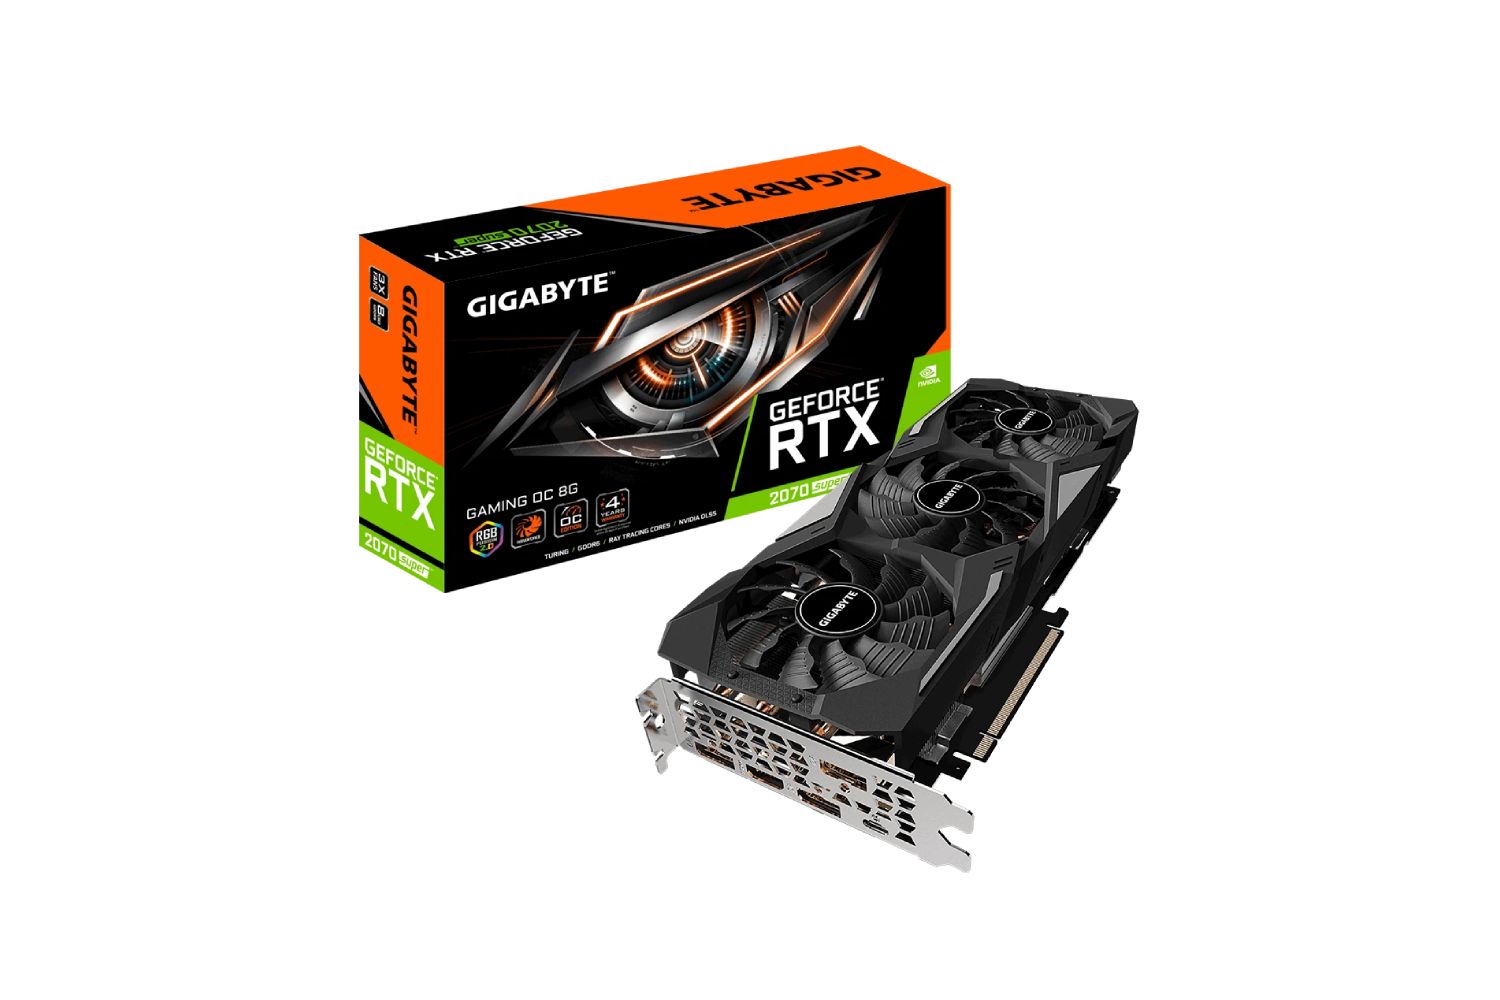 Gigabyte GeForce RTX 2070 Super Gaming OC 8G Graphics Card